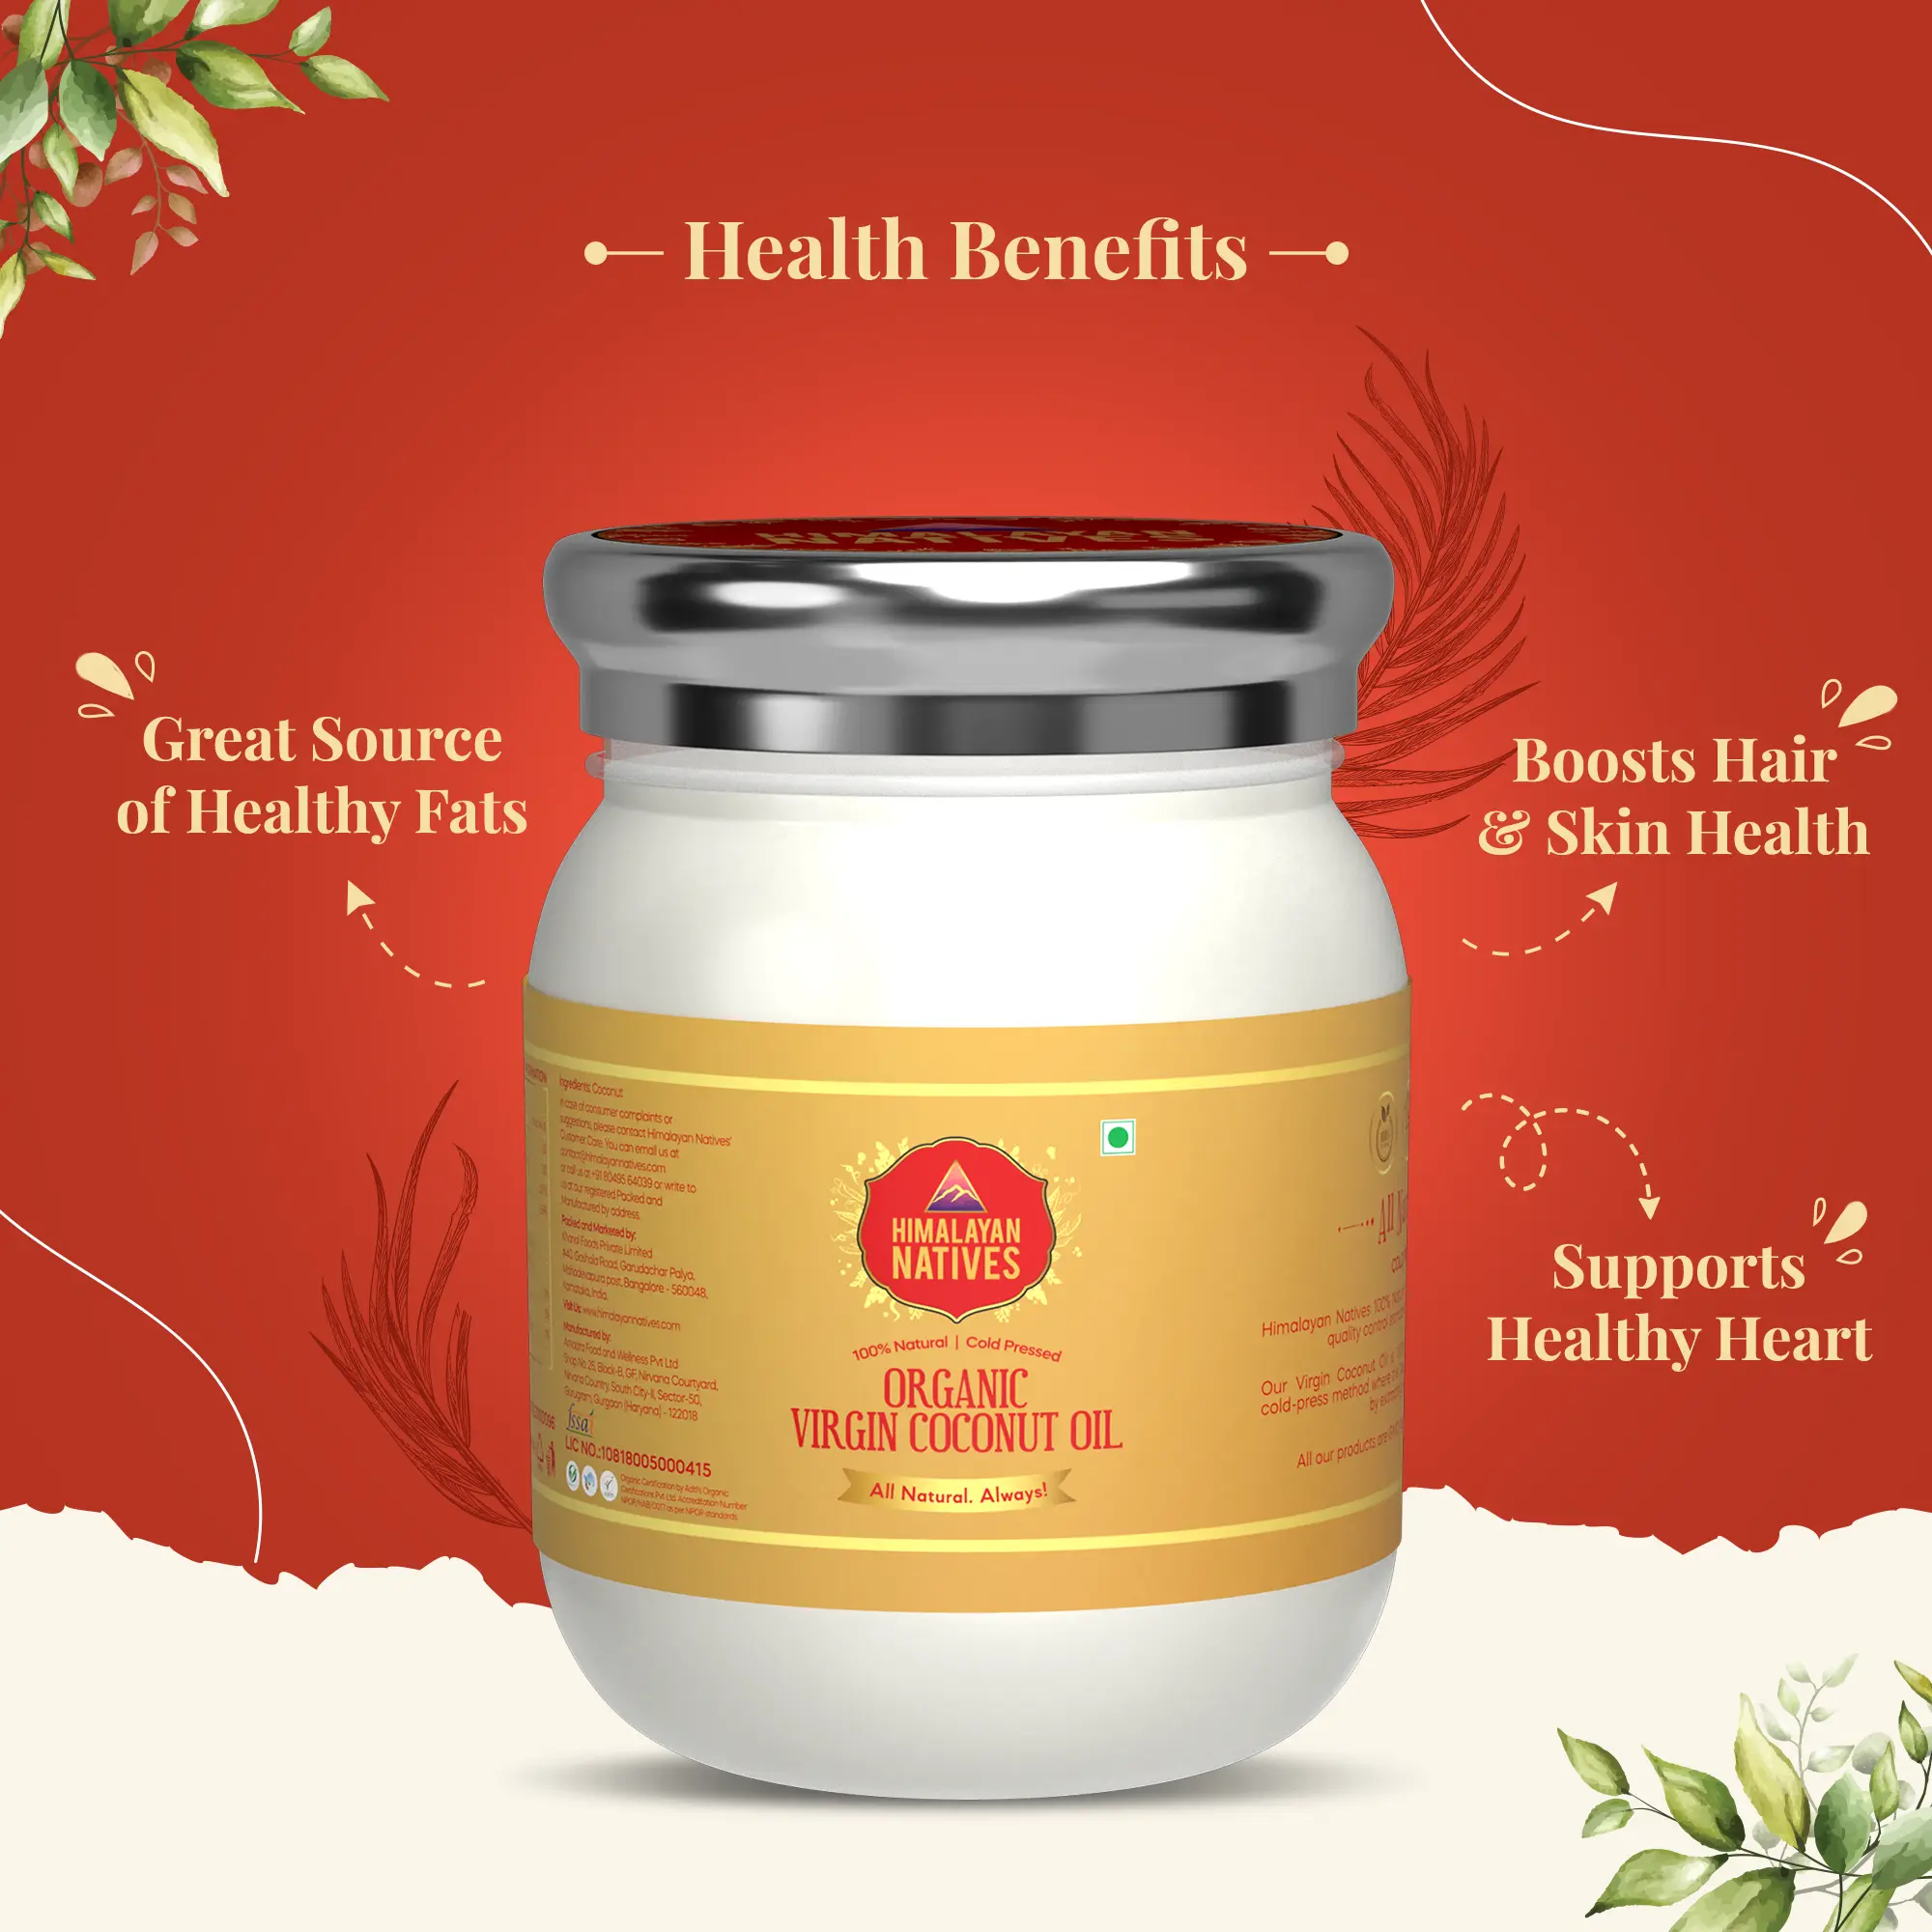 Health Benefits - Organic Virgin Coconut Oil